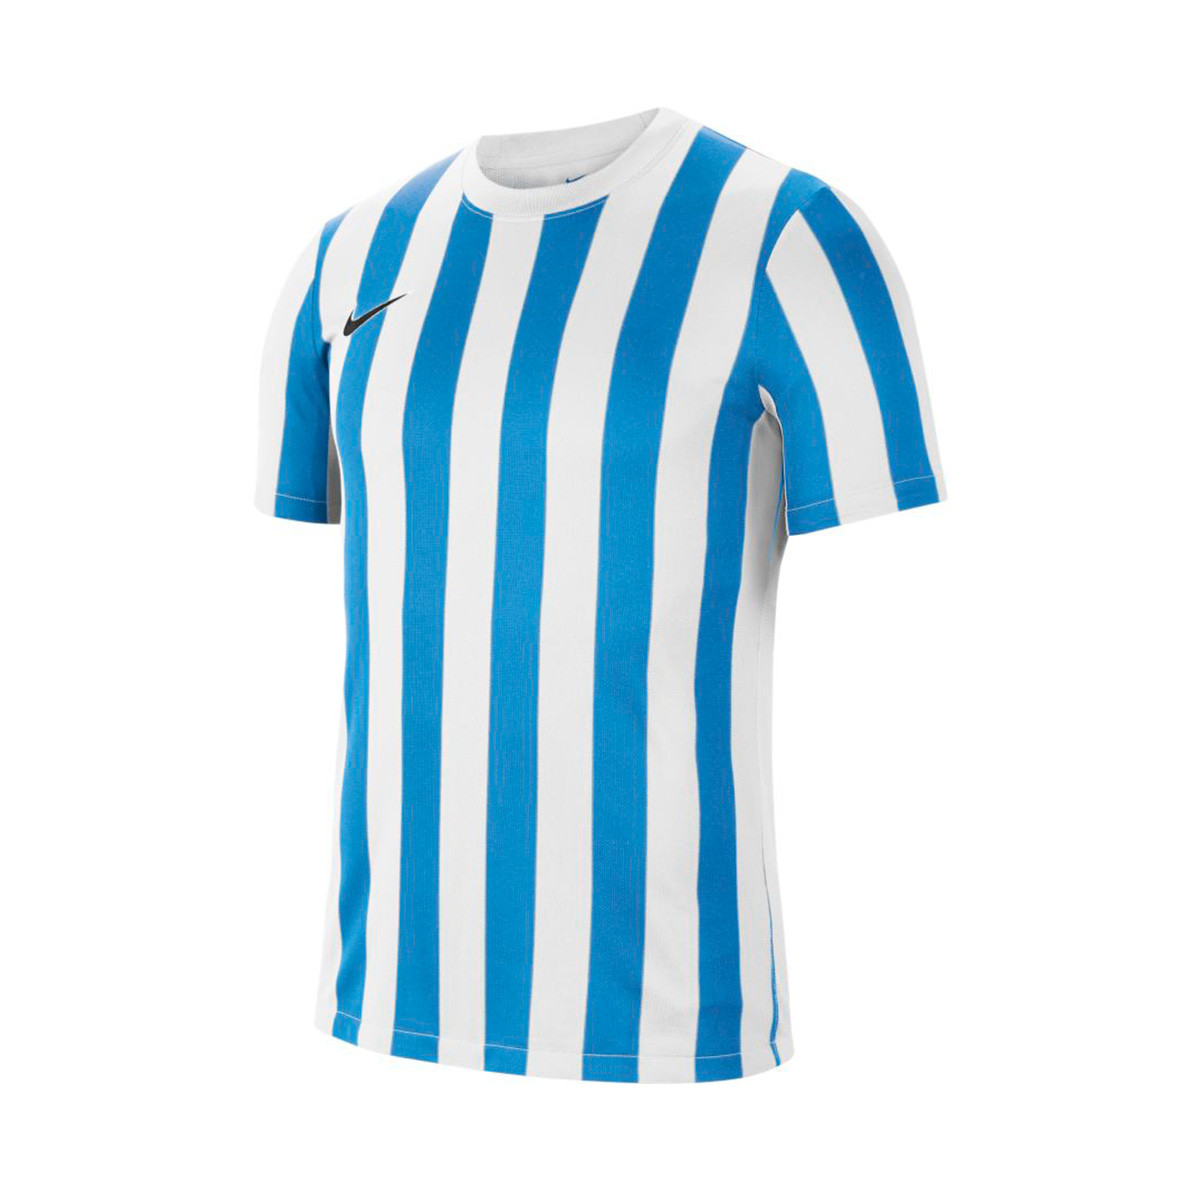 Camiseta Striped Division IV m/c White-University Blue-Black - Emotion